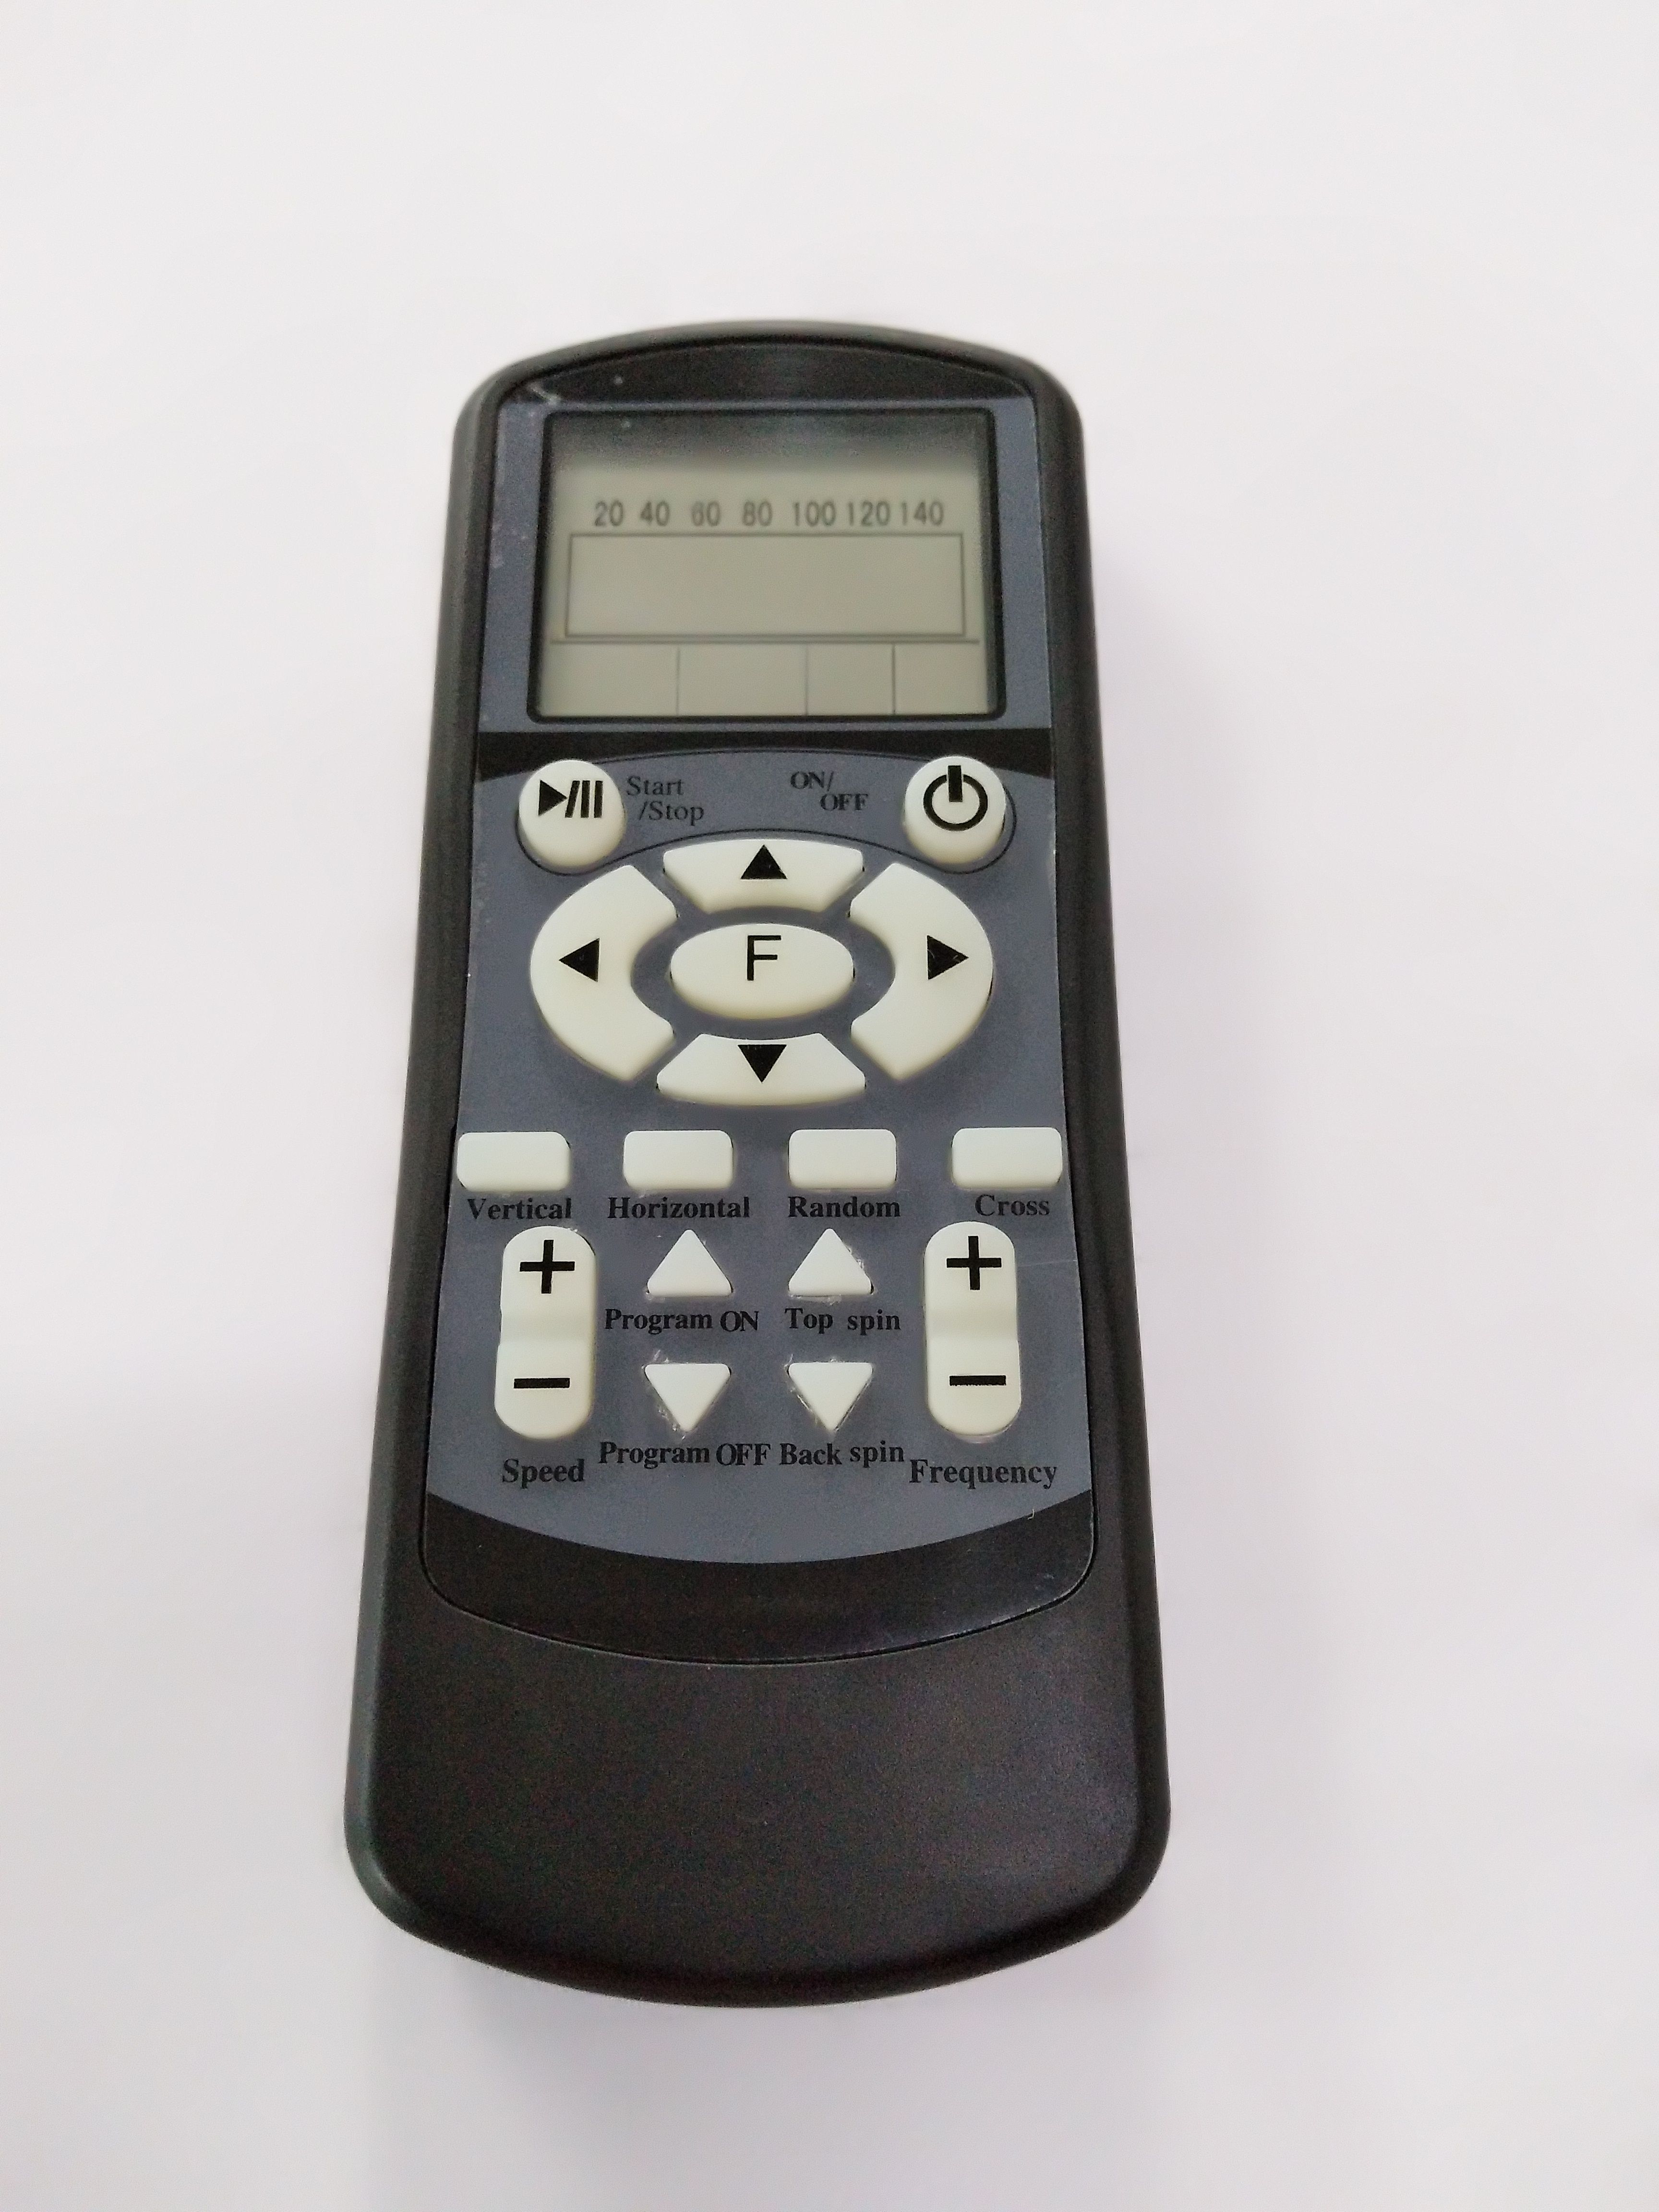 Ballmachine Accessories: MSV PlayTec Remote Control A0